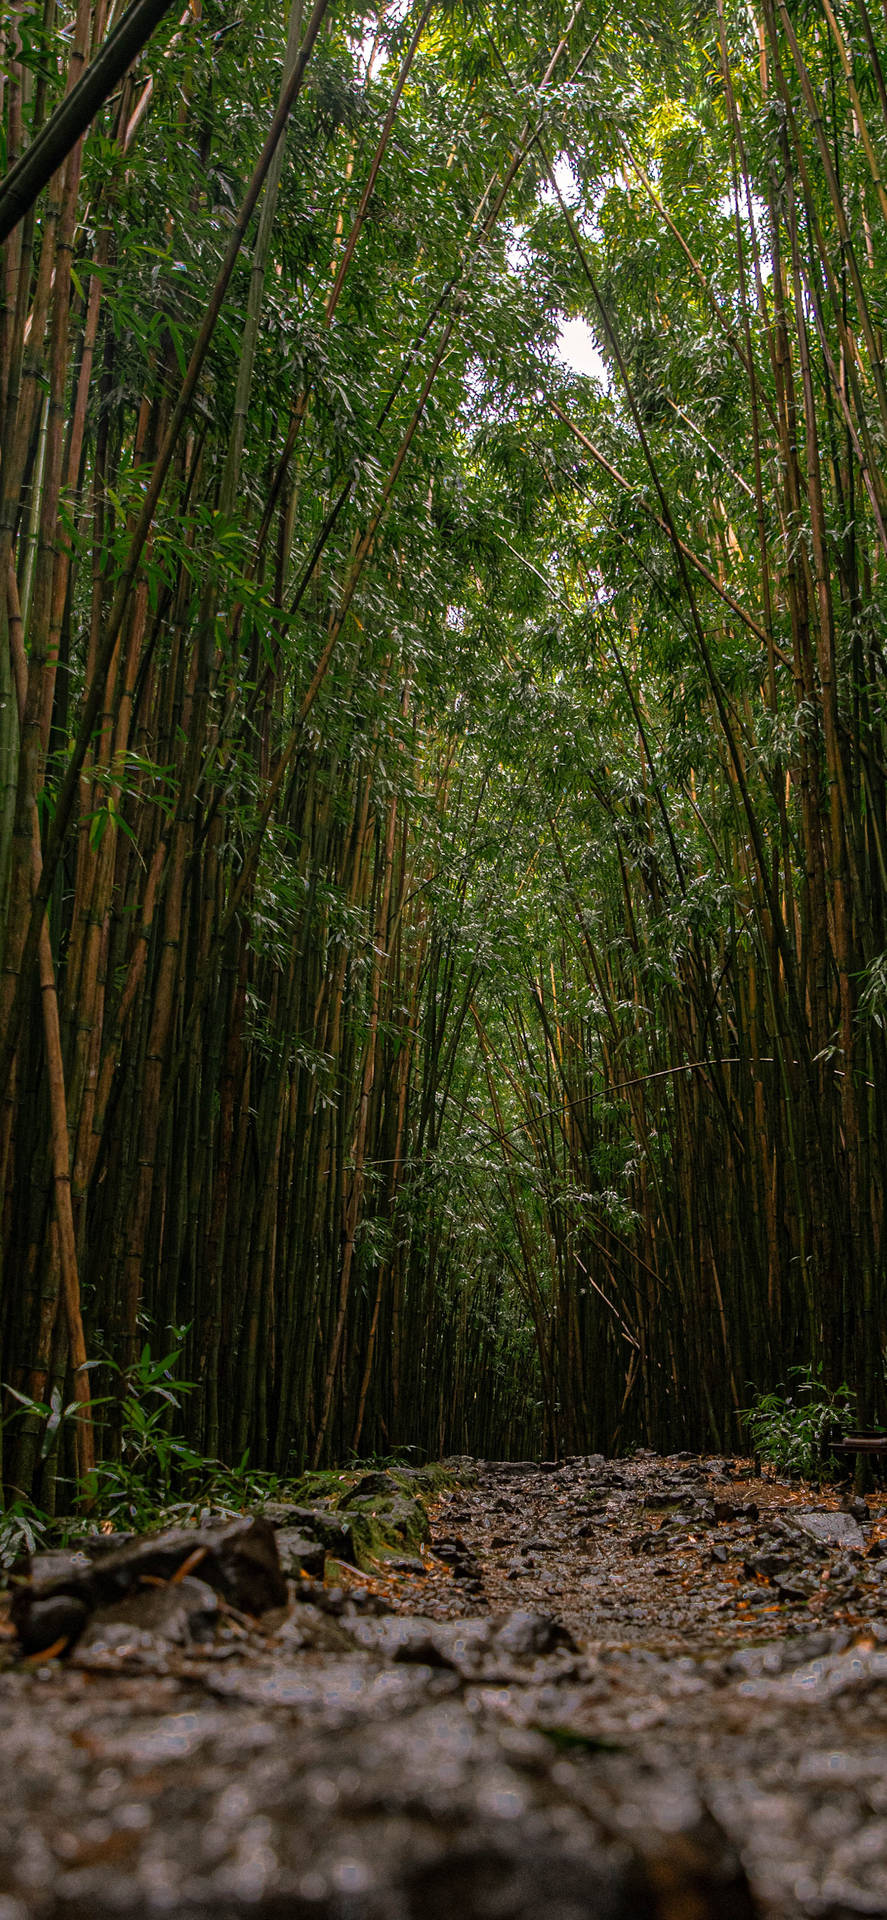 Bamboo Forest Floor IPhone Wallpaper